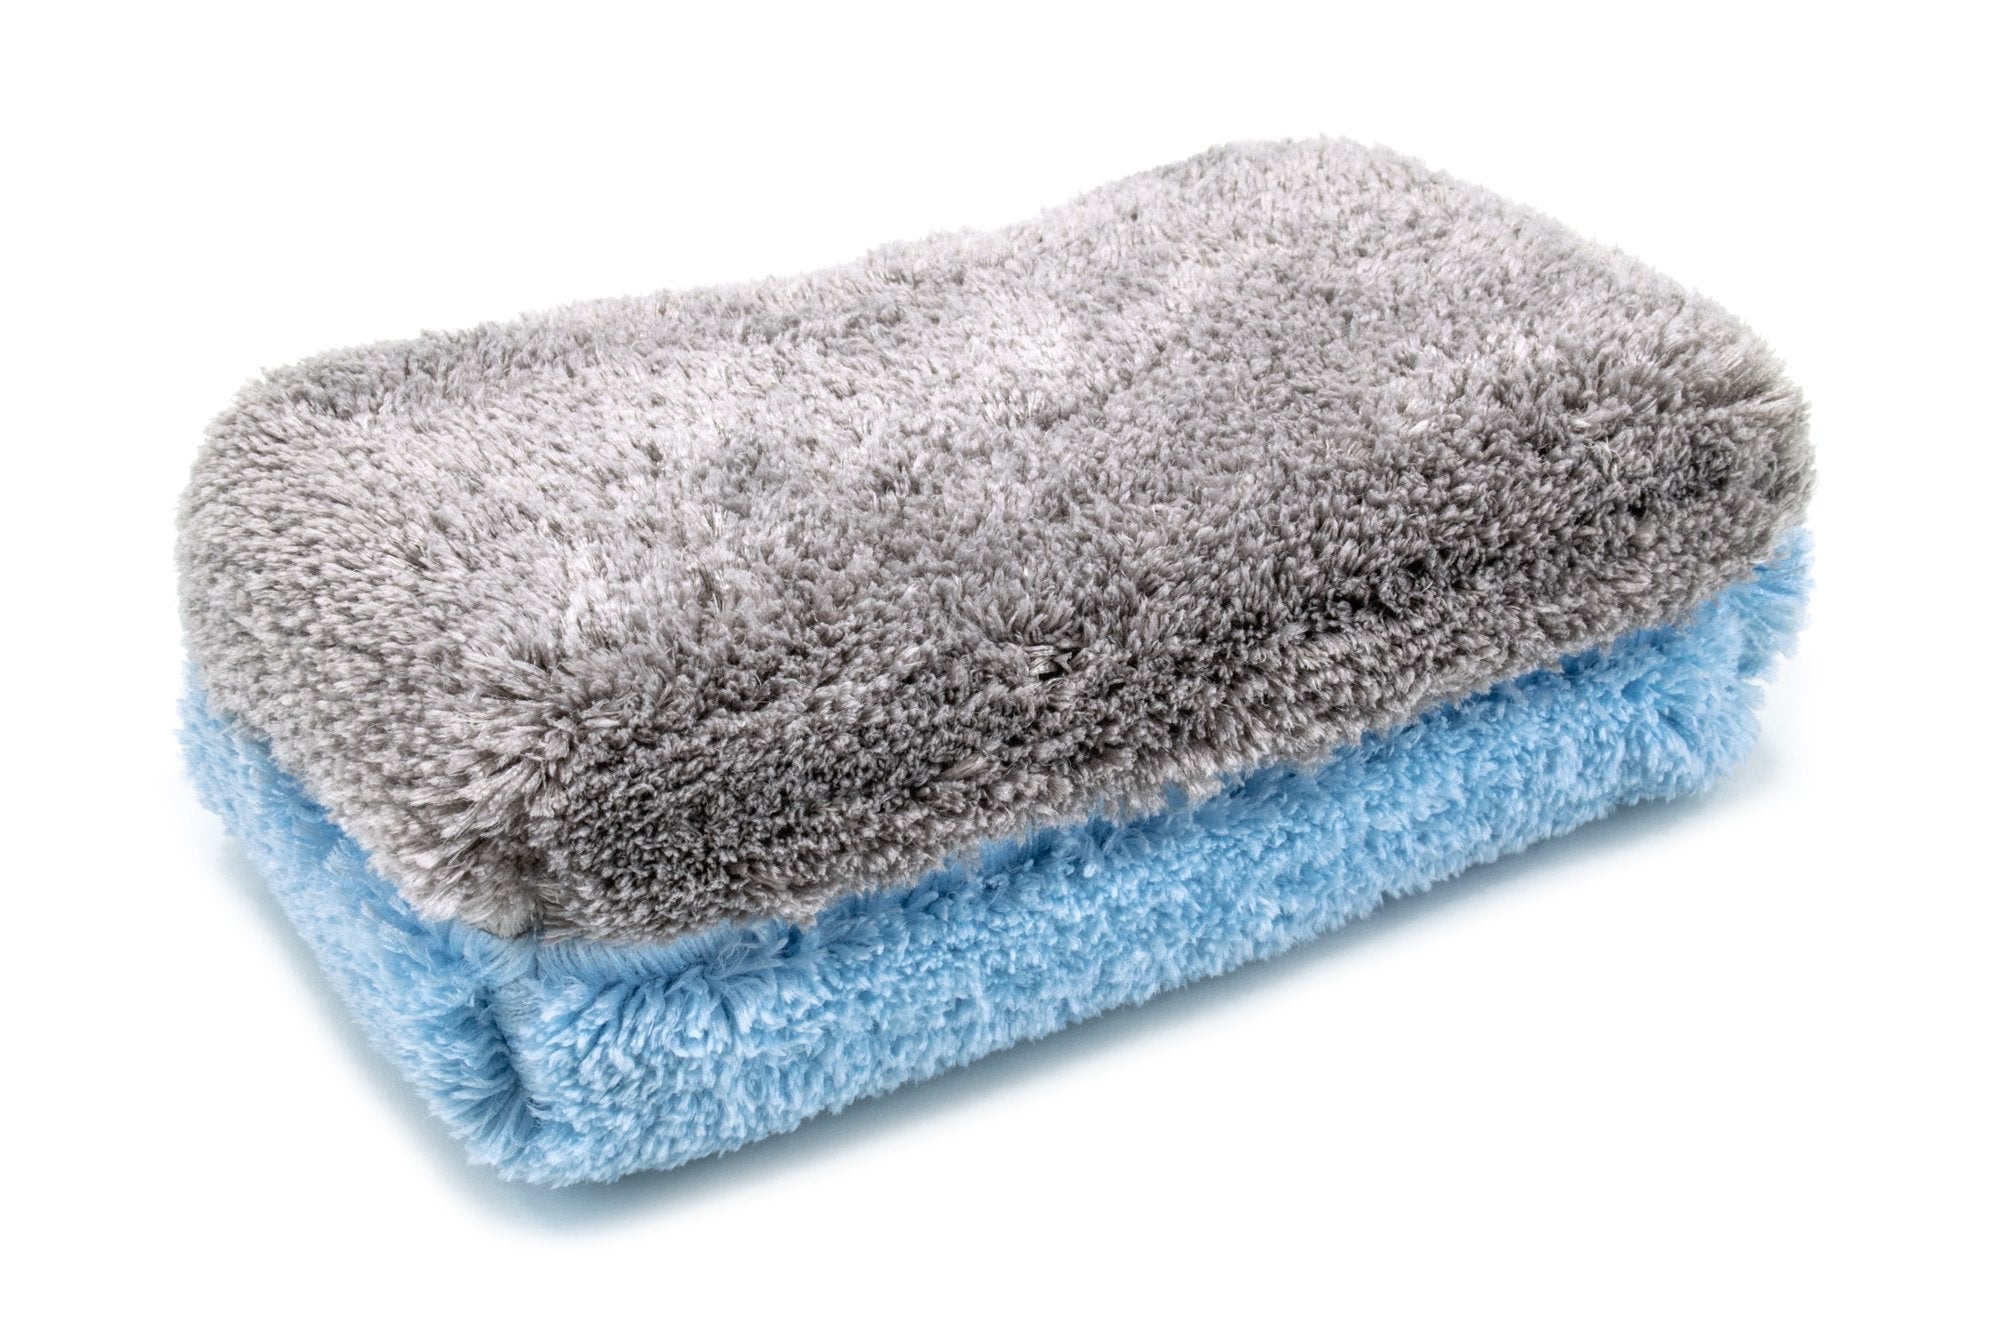 [Block Party] Microfiber Wash Sponge (4.5 x 8 x 2.5) Blue/Gray - 1 pack